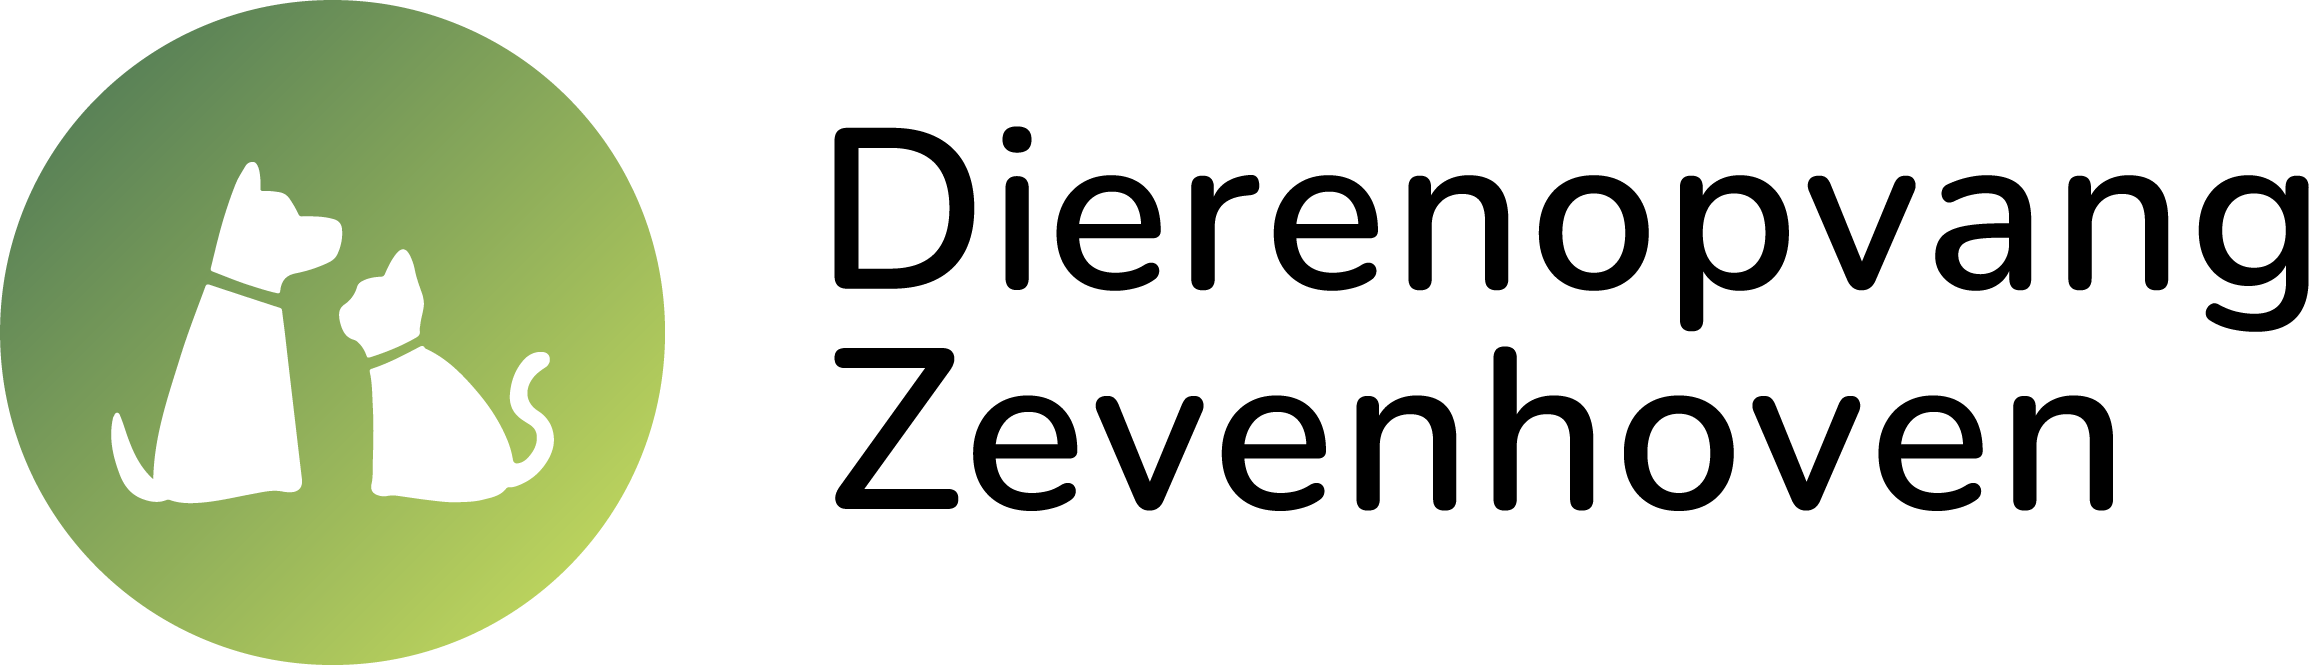 logo-dierenopvang-zevenhoven-556x160-rgb